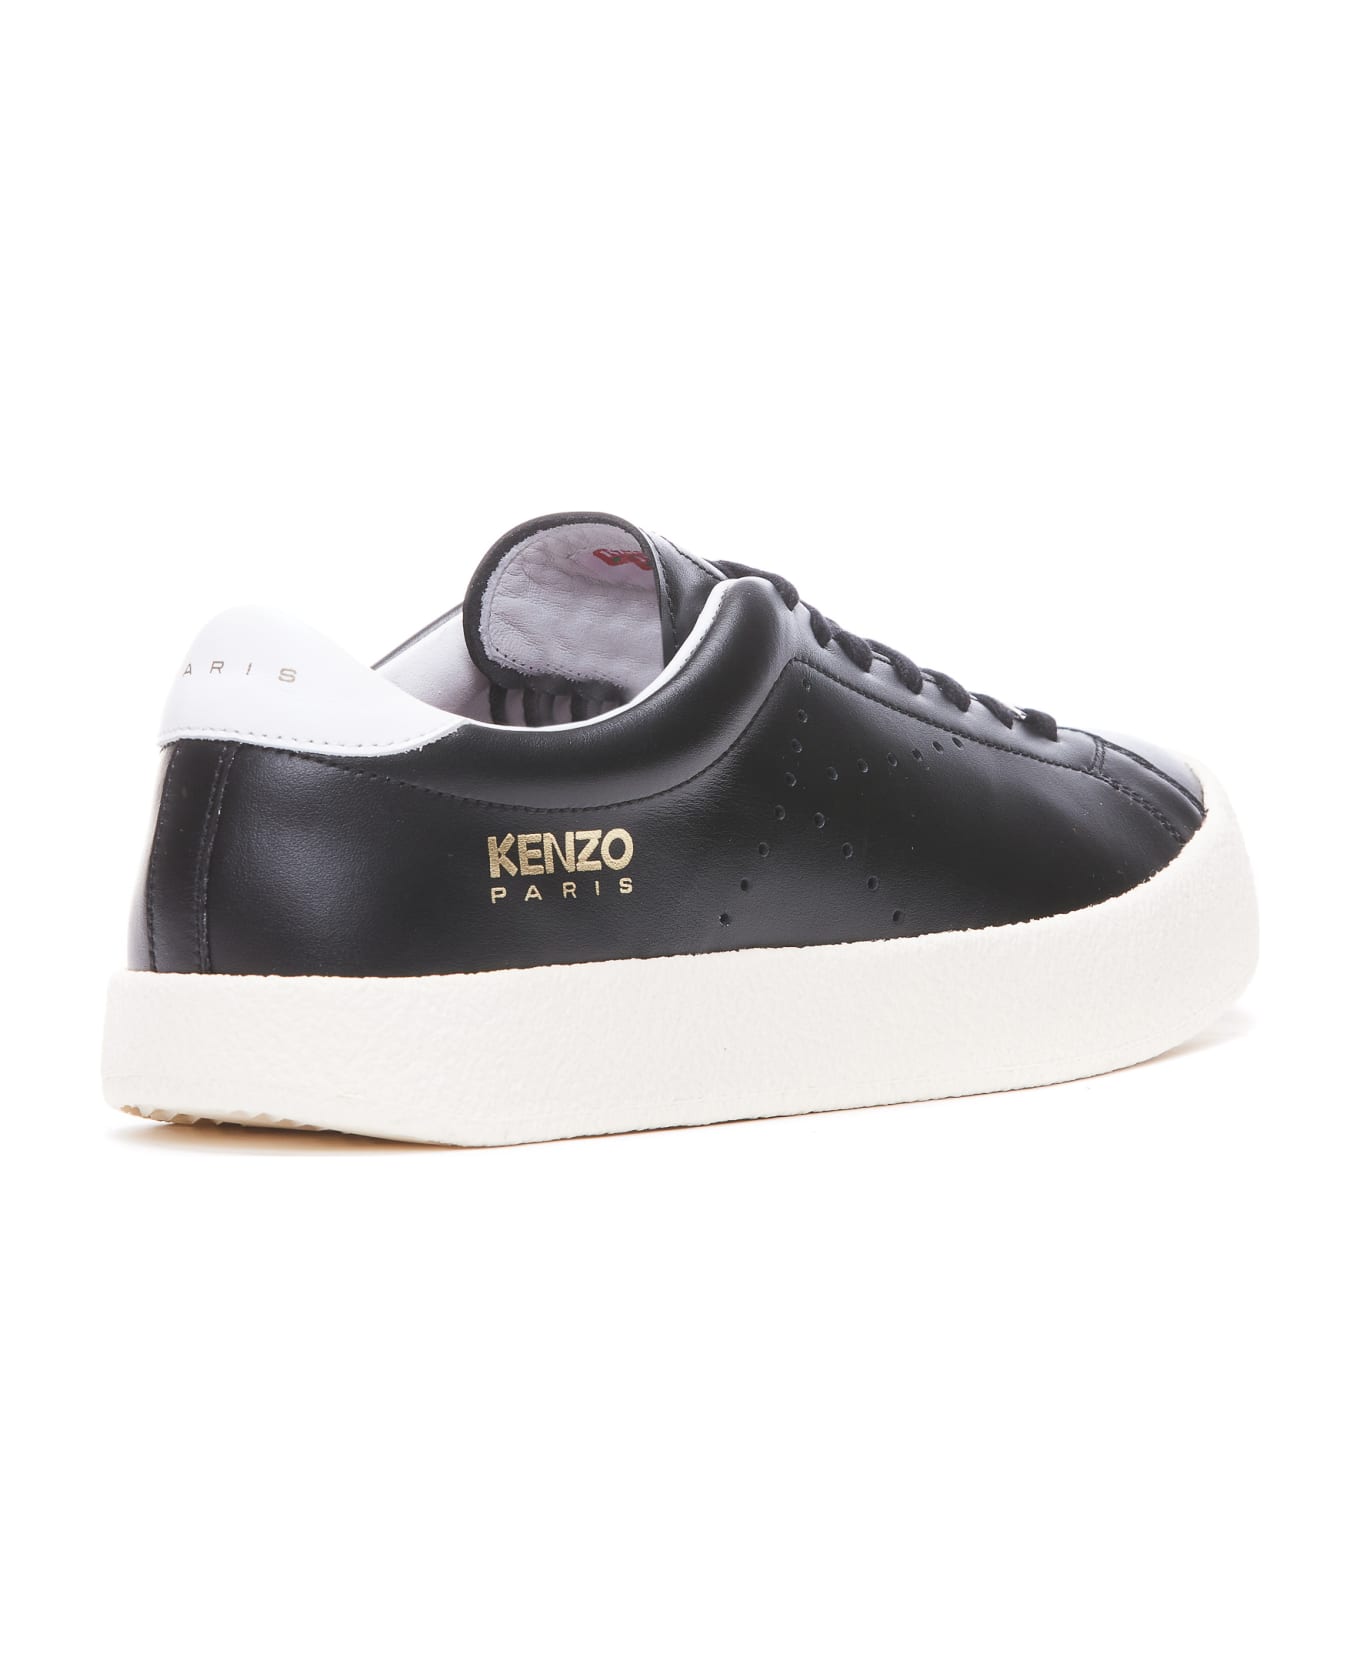 Kenzo Leather Sneakers - Black